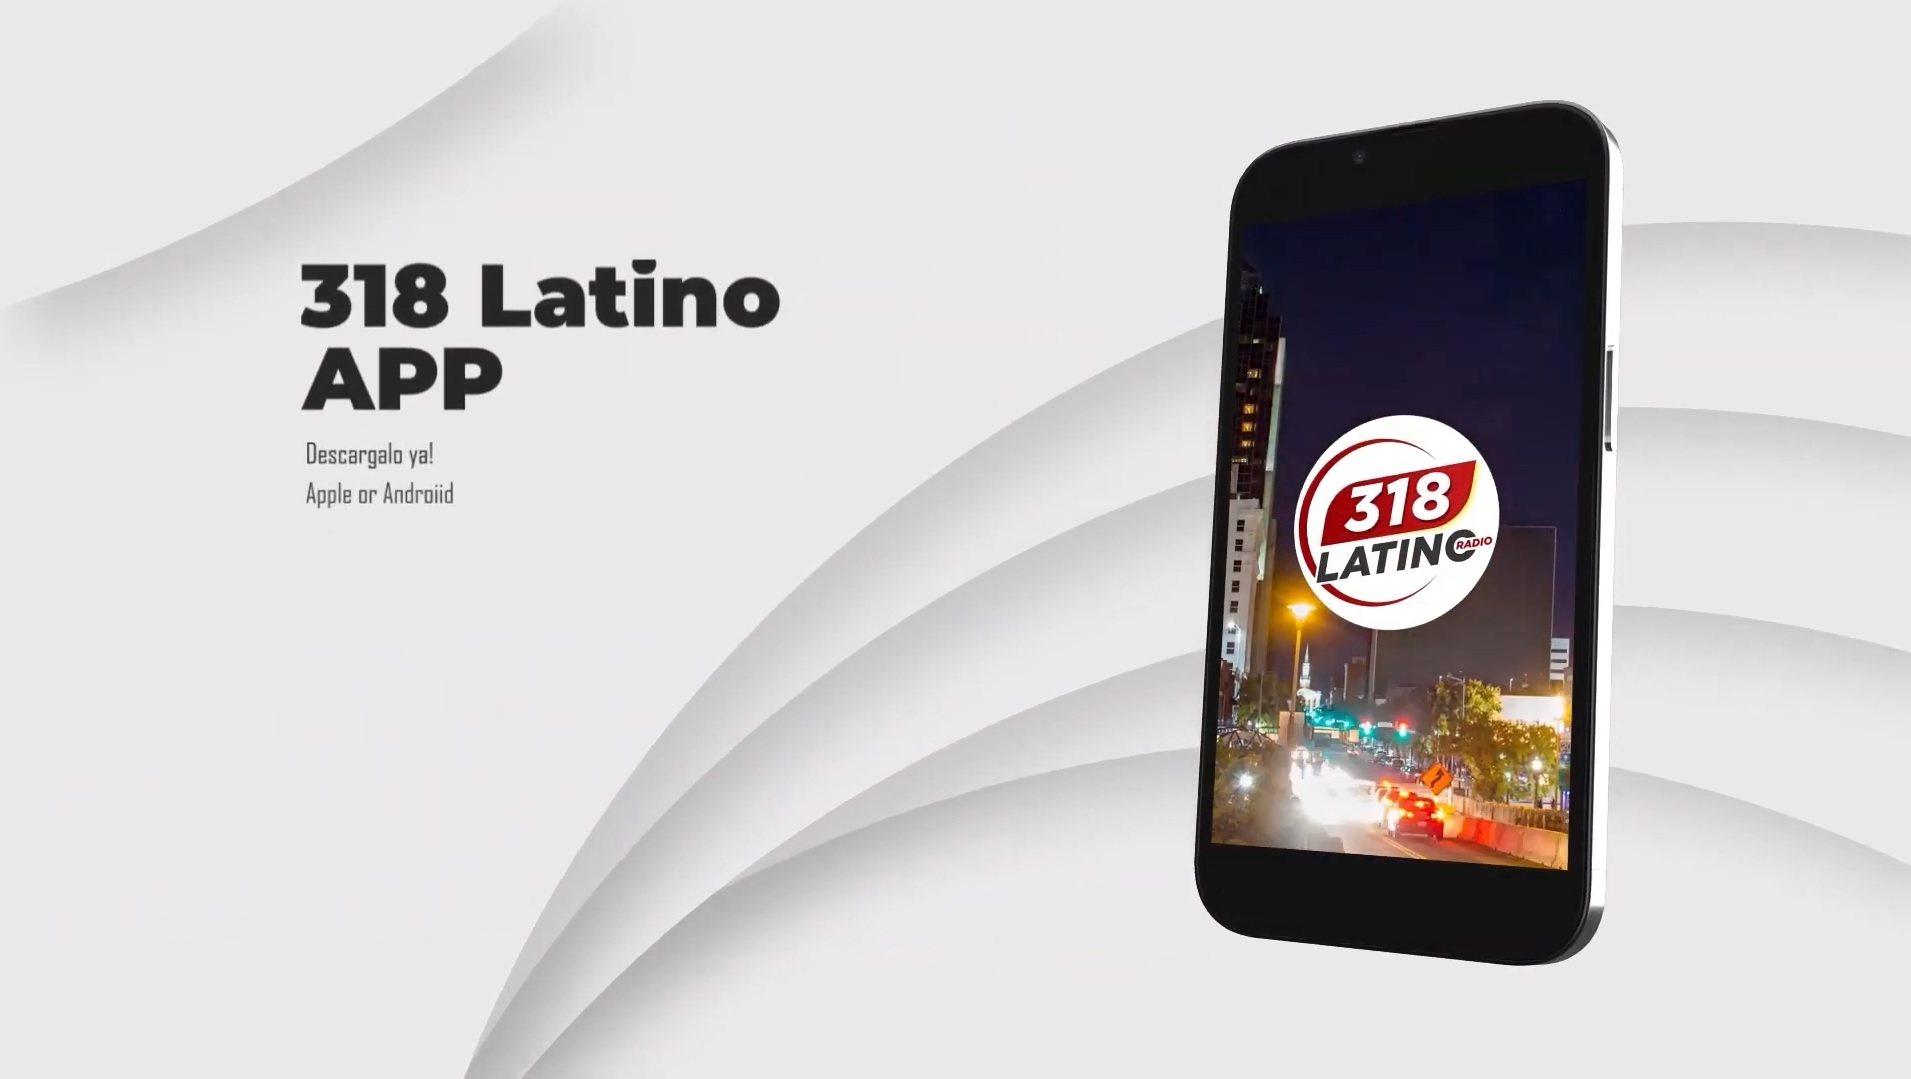 318 Latino App ya esta disponible